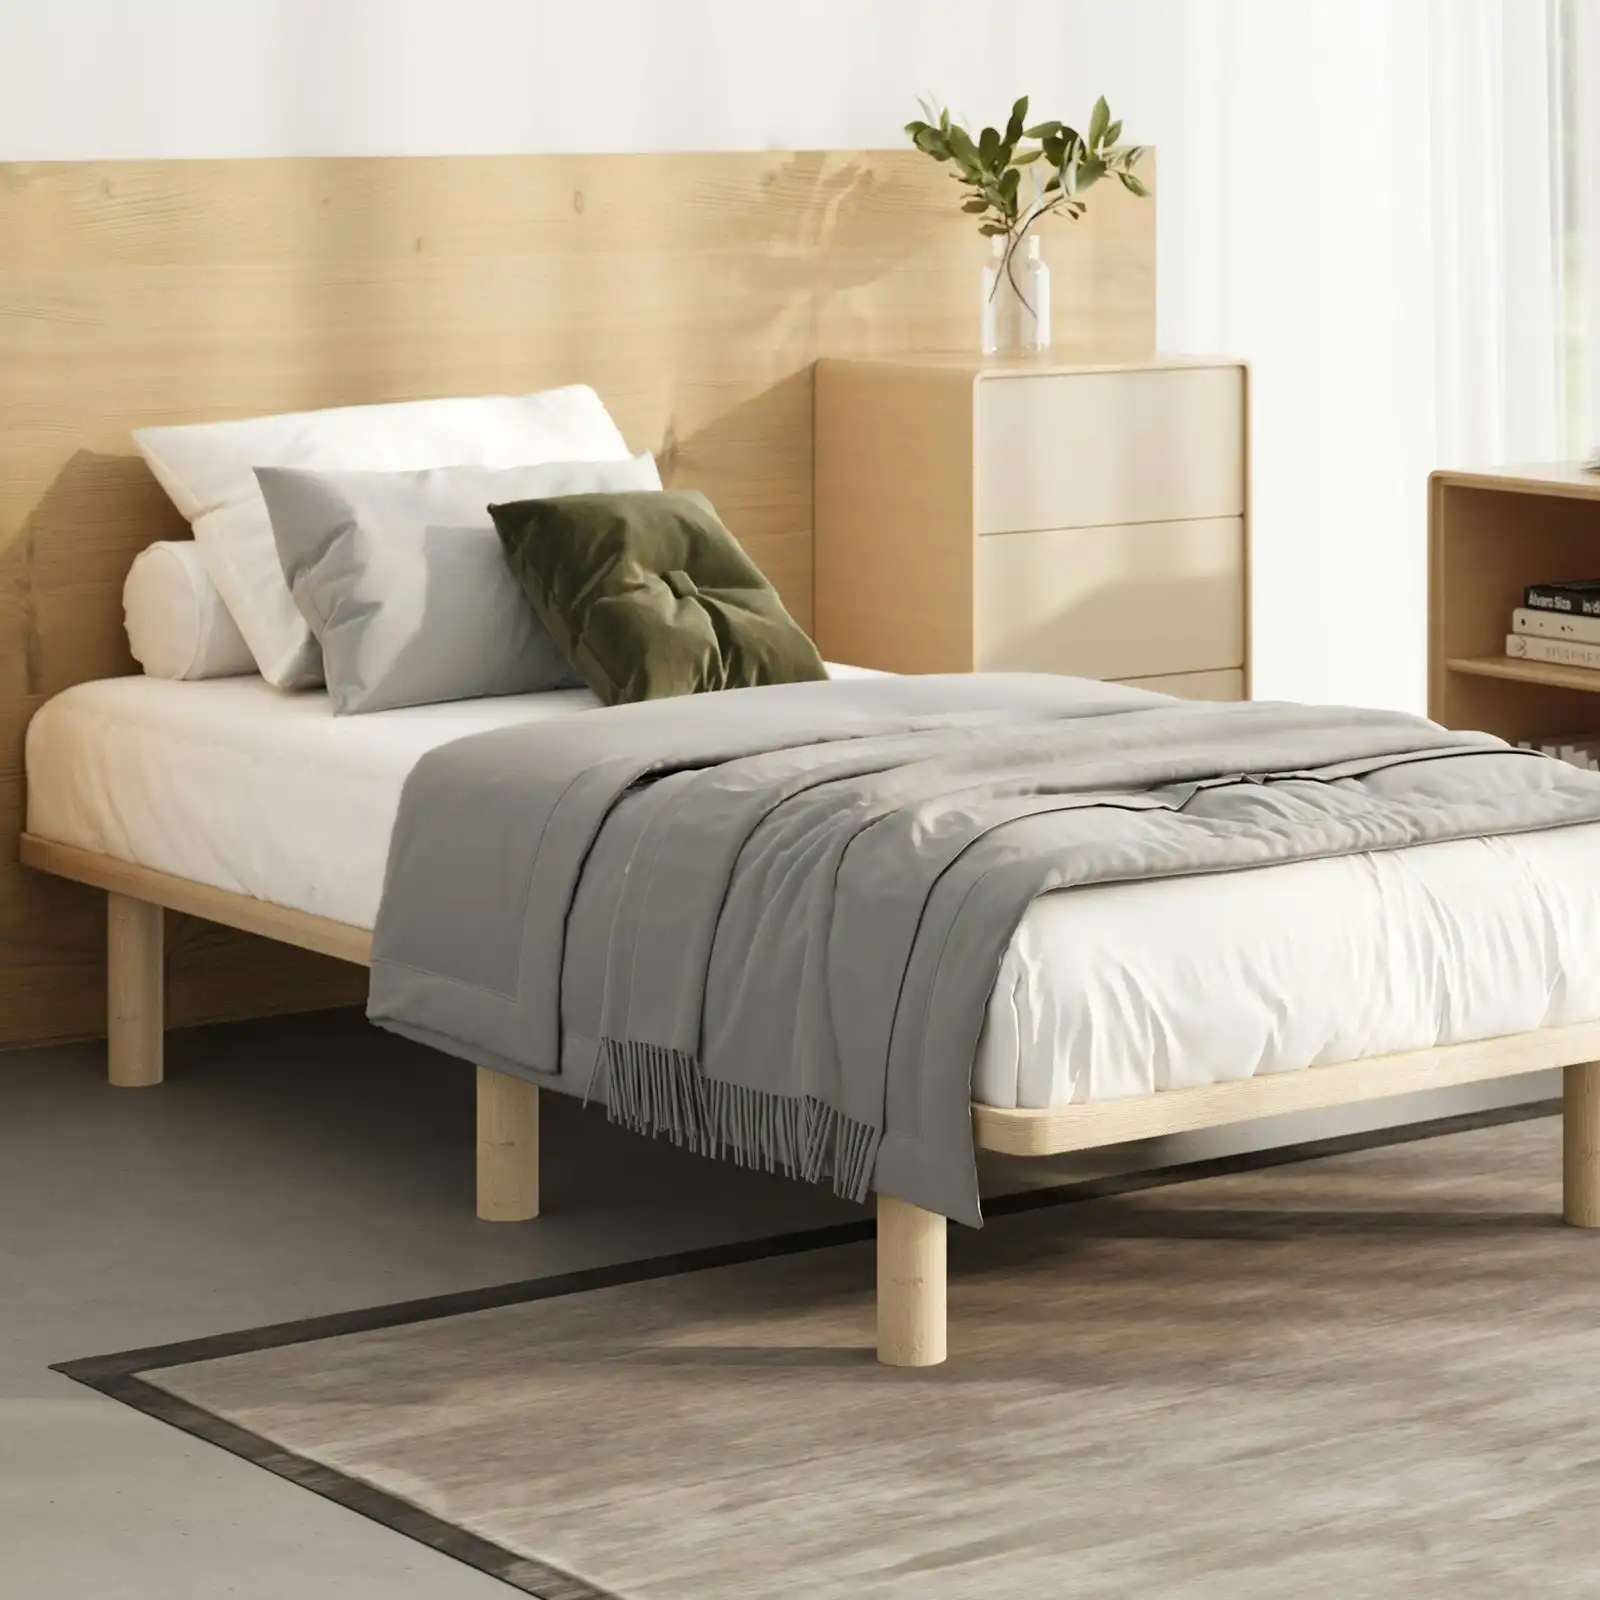 Oikiture Bed Frame Single Size Wooden Bed Base Platform Timber